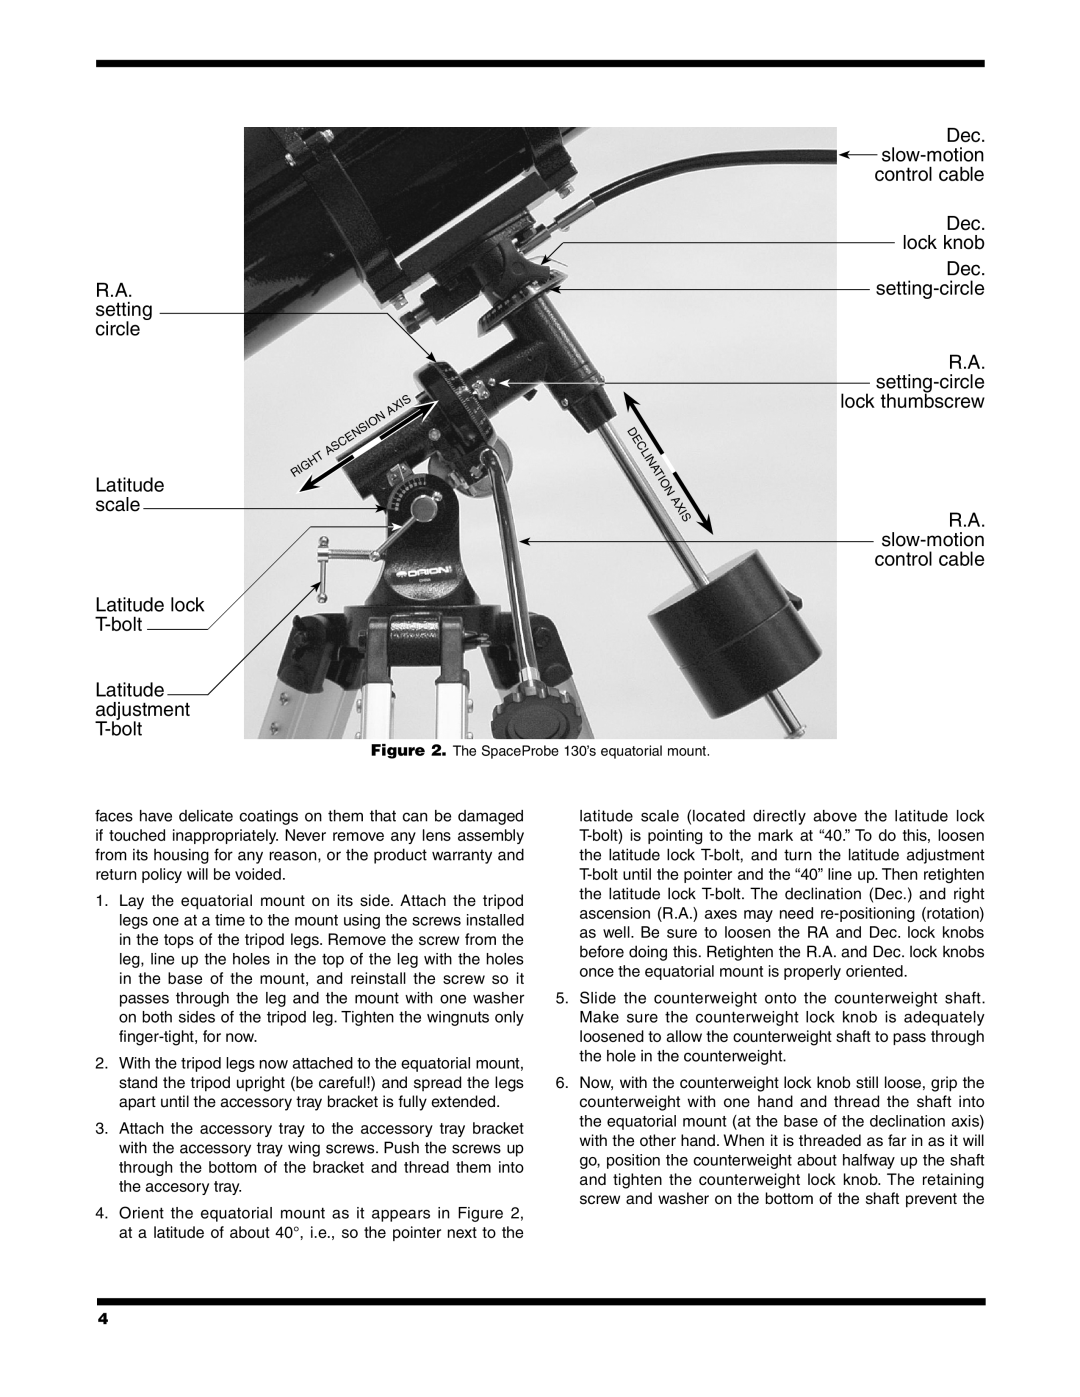 Orion 9851 R.A. setting circle Latitude scale Latitude lock T-bolt, Latitude adjustment T-bolt, Dec. setting‑circle 